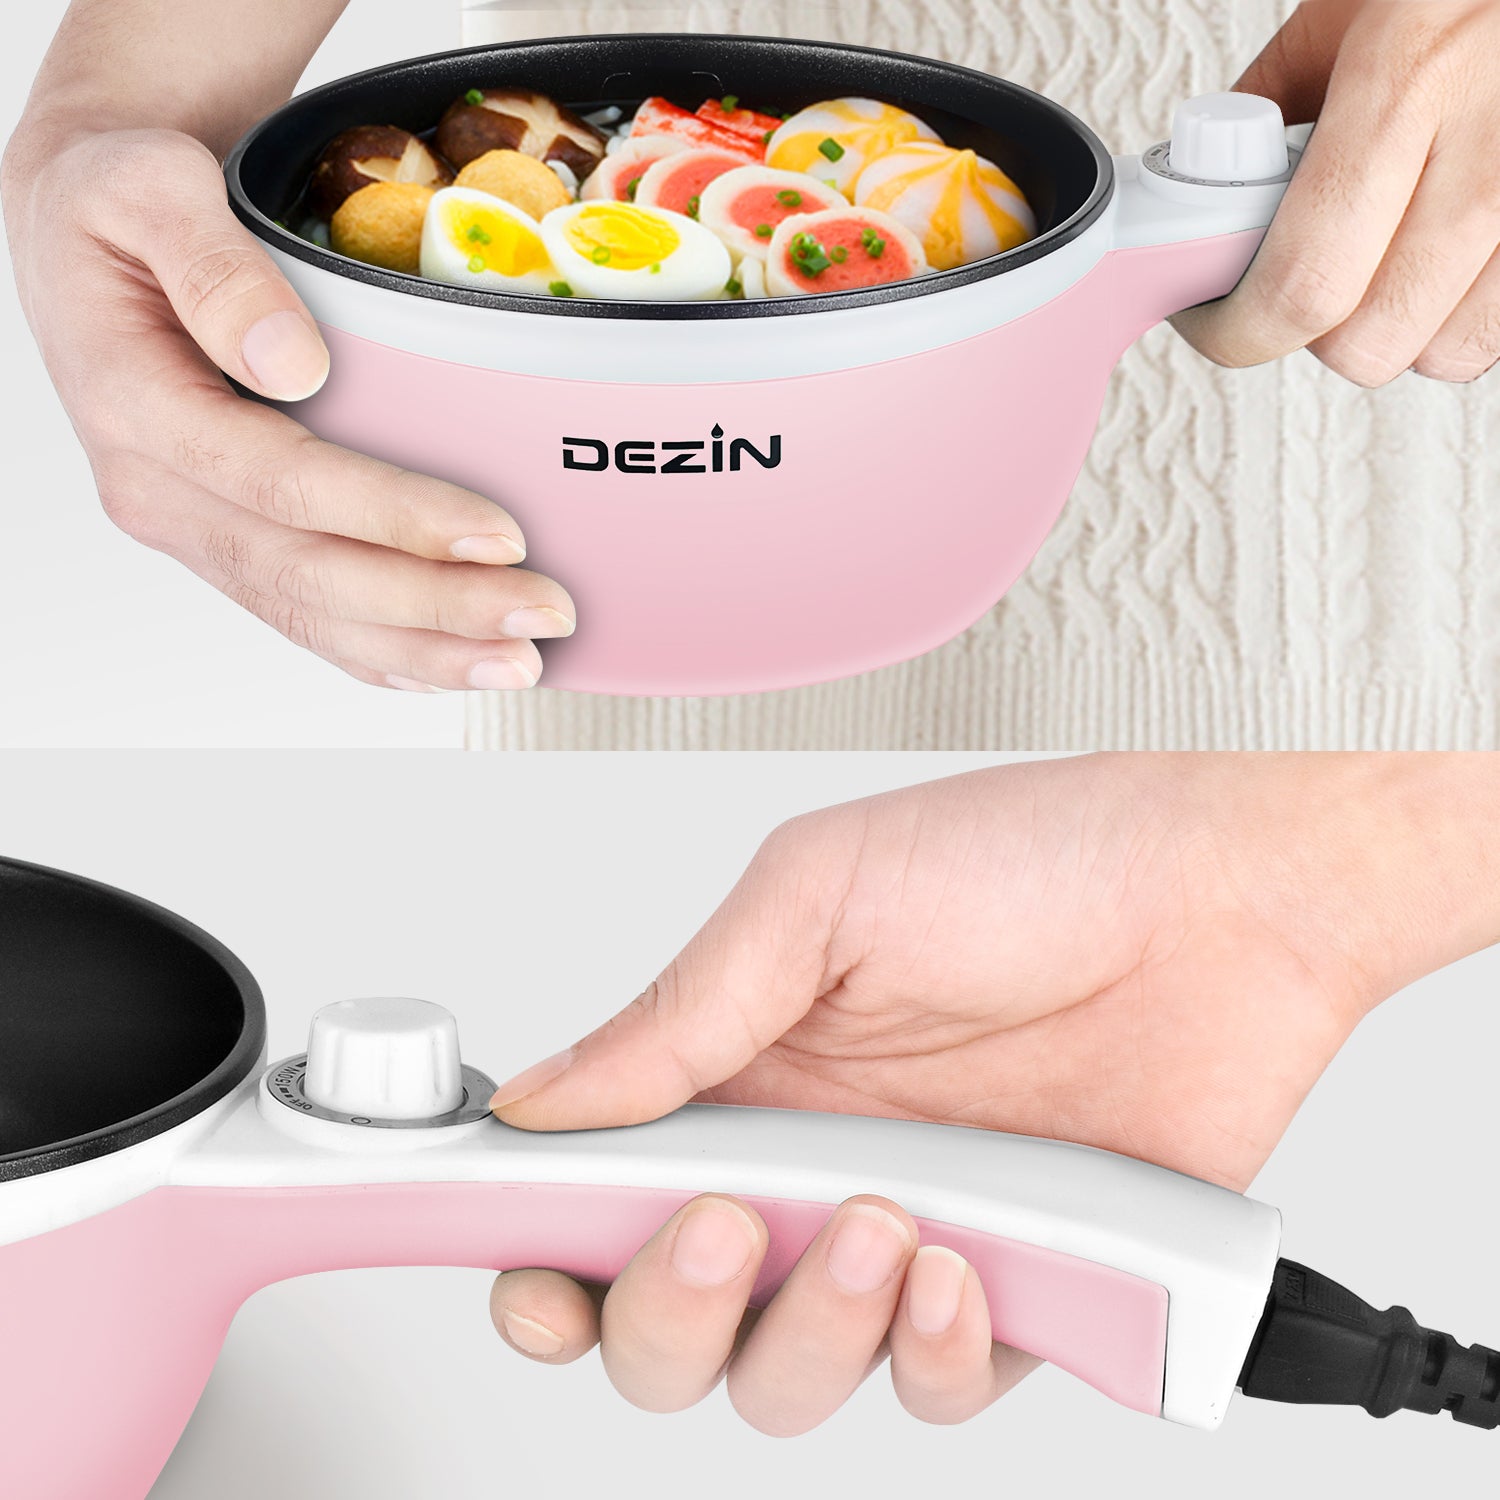 Dezin Electric Cooker, 1.5L Portable Ramen Cooker with Nonstick